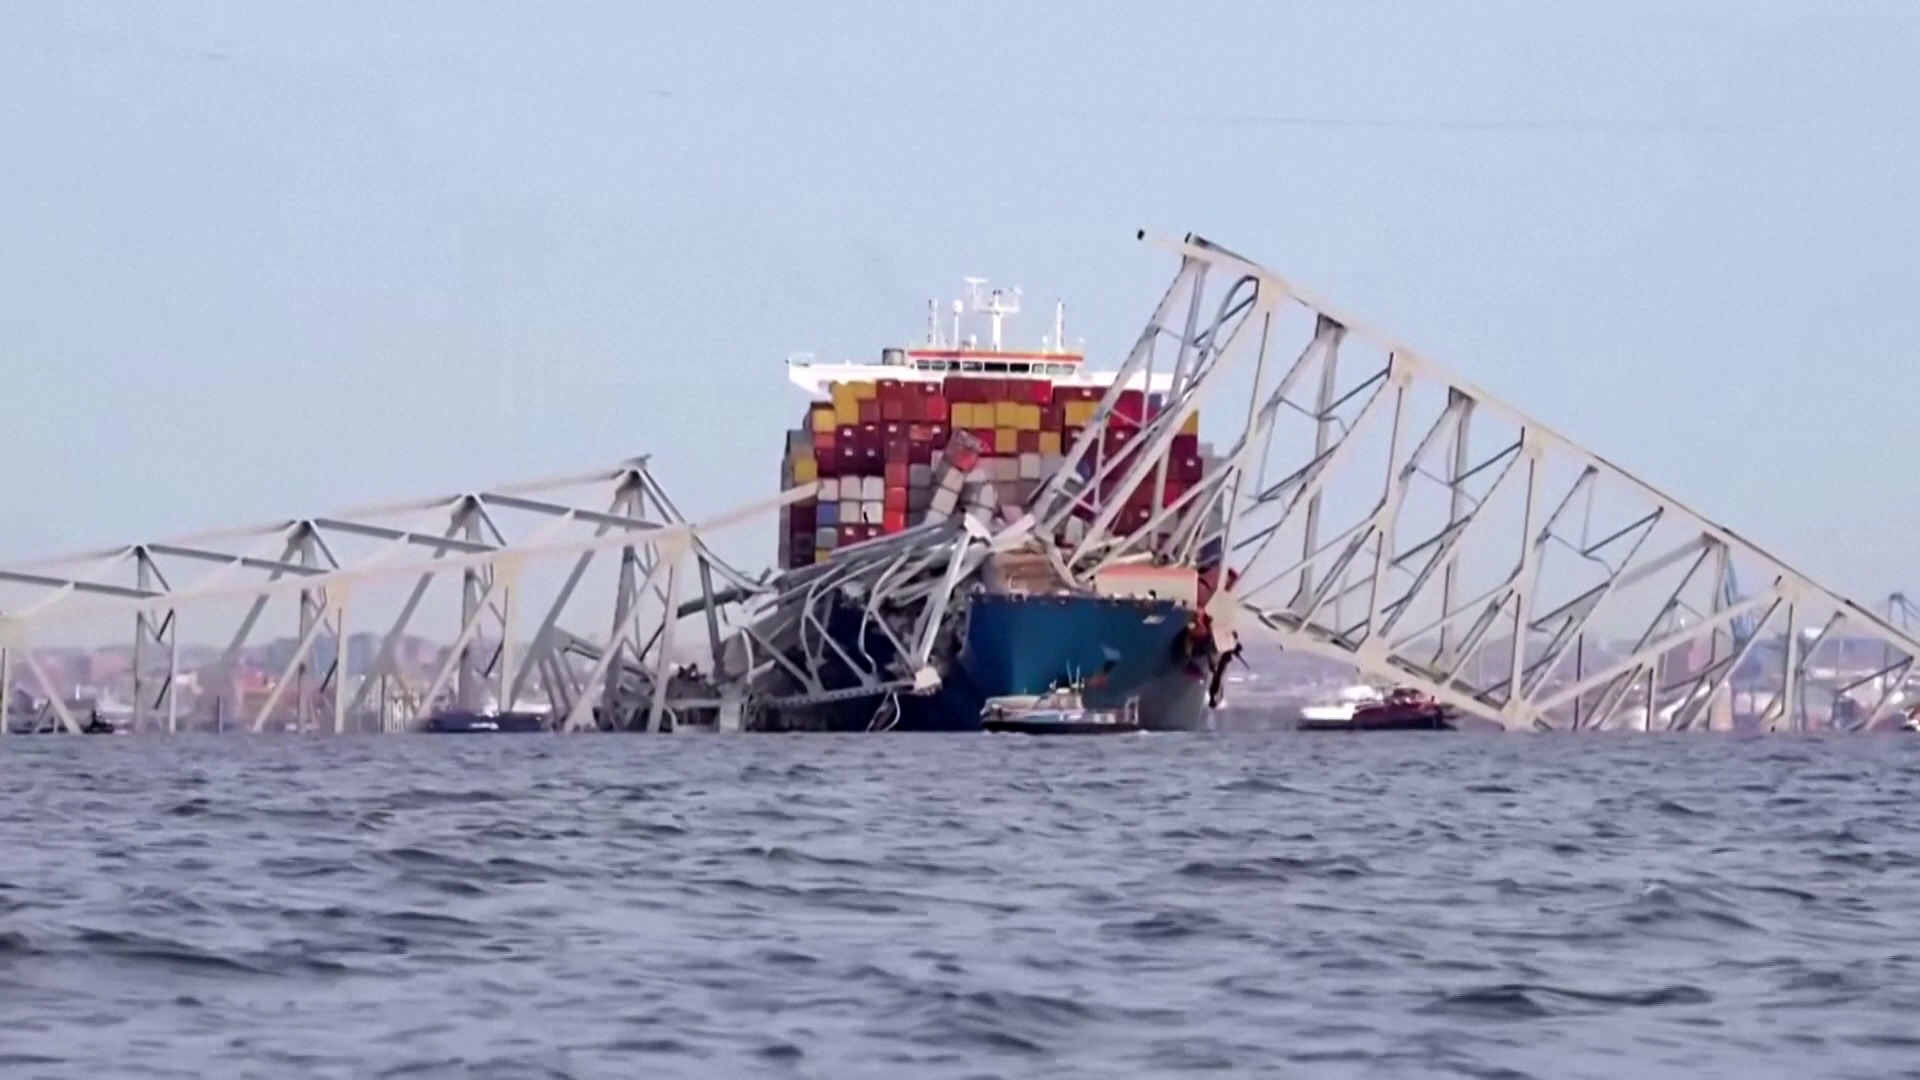 6 presumed dead after cargo ship slams into Baltimore bridge